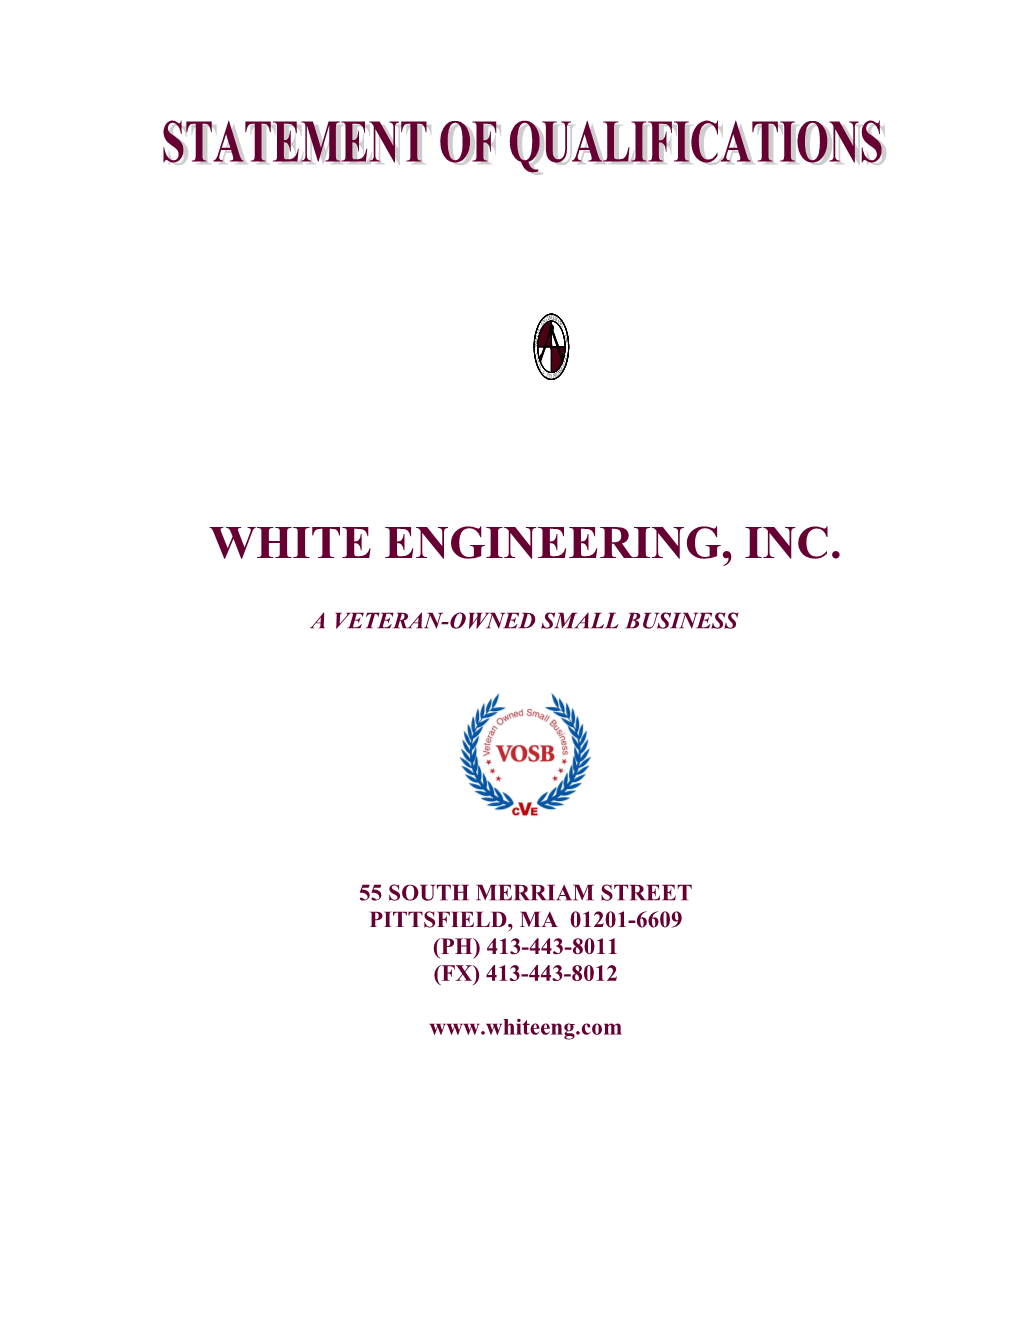 White Engineering, Inc